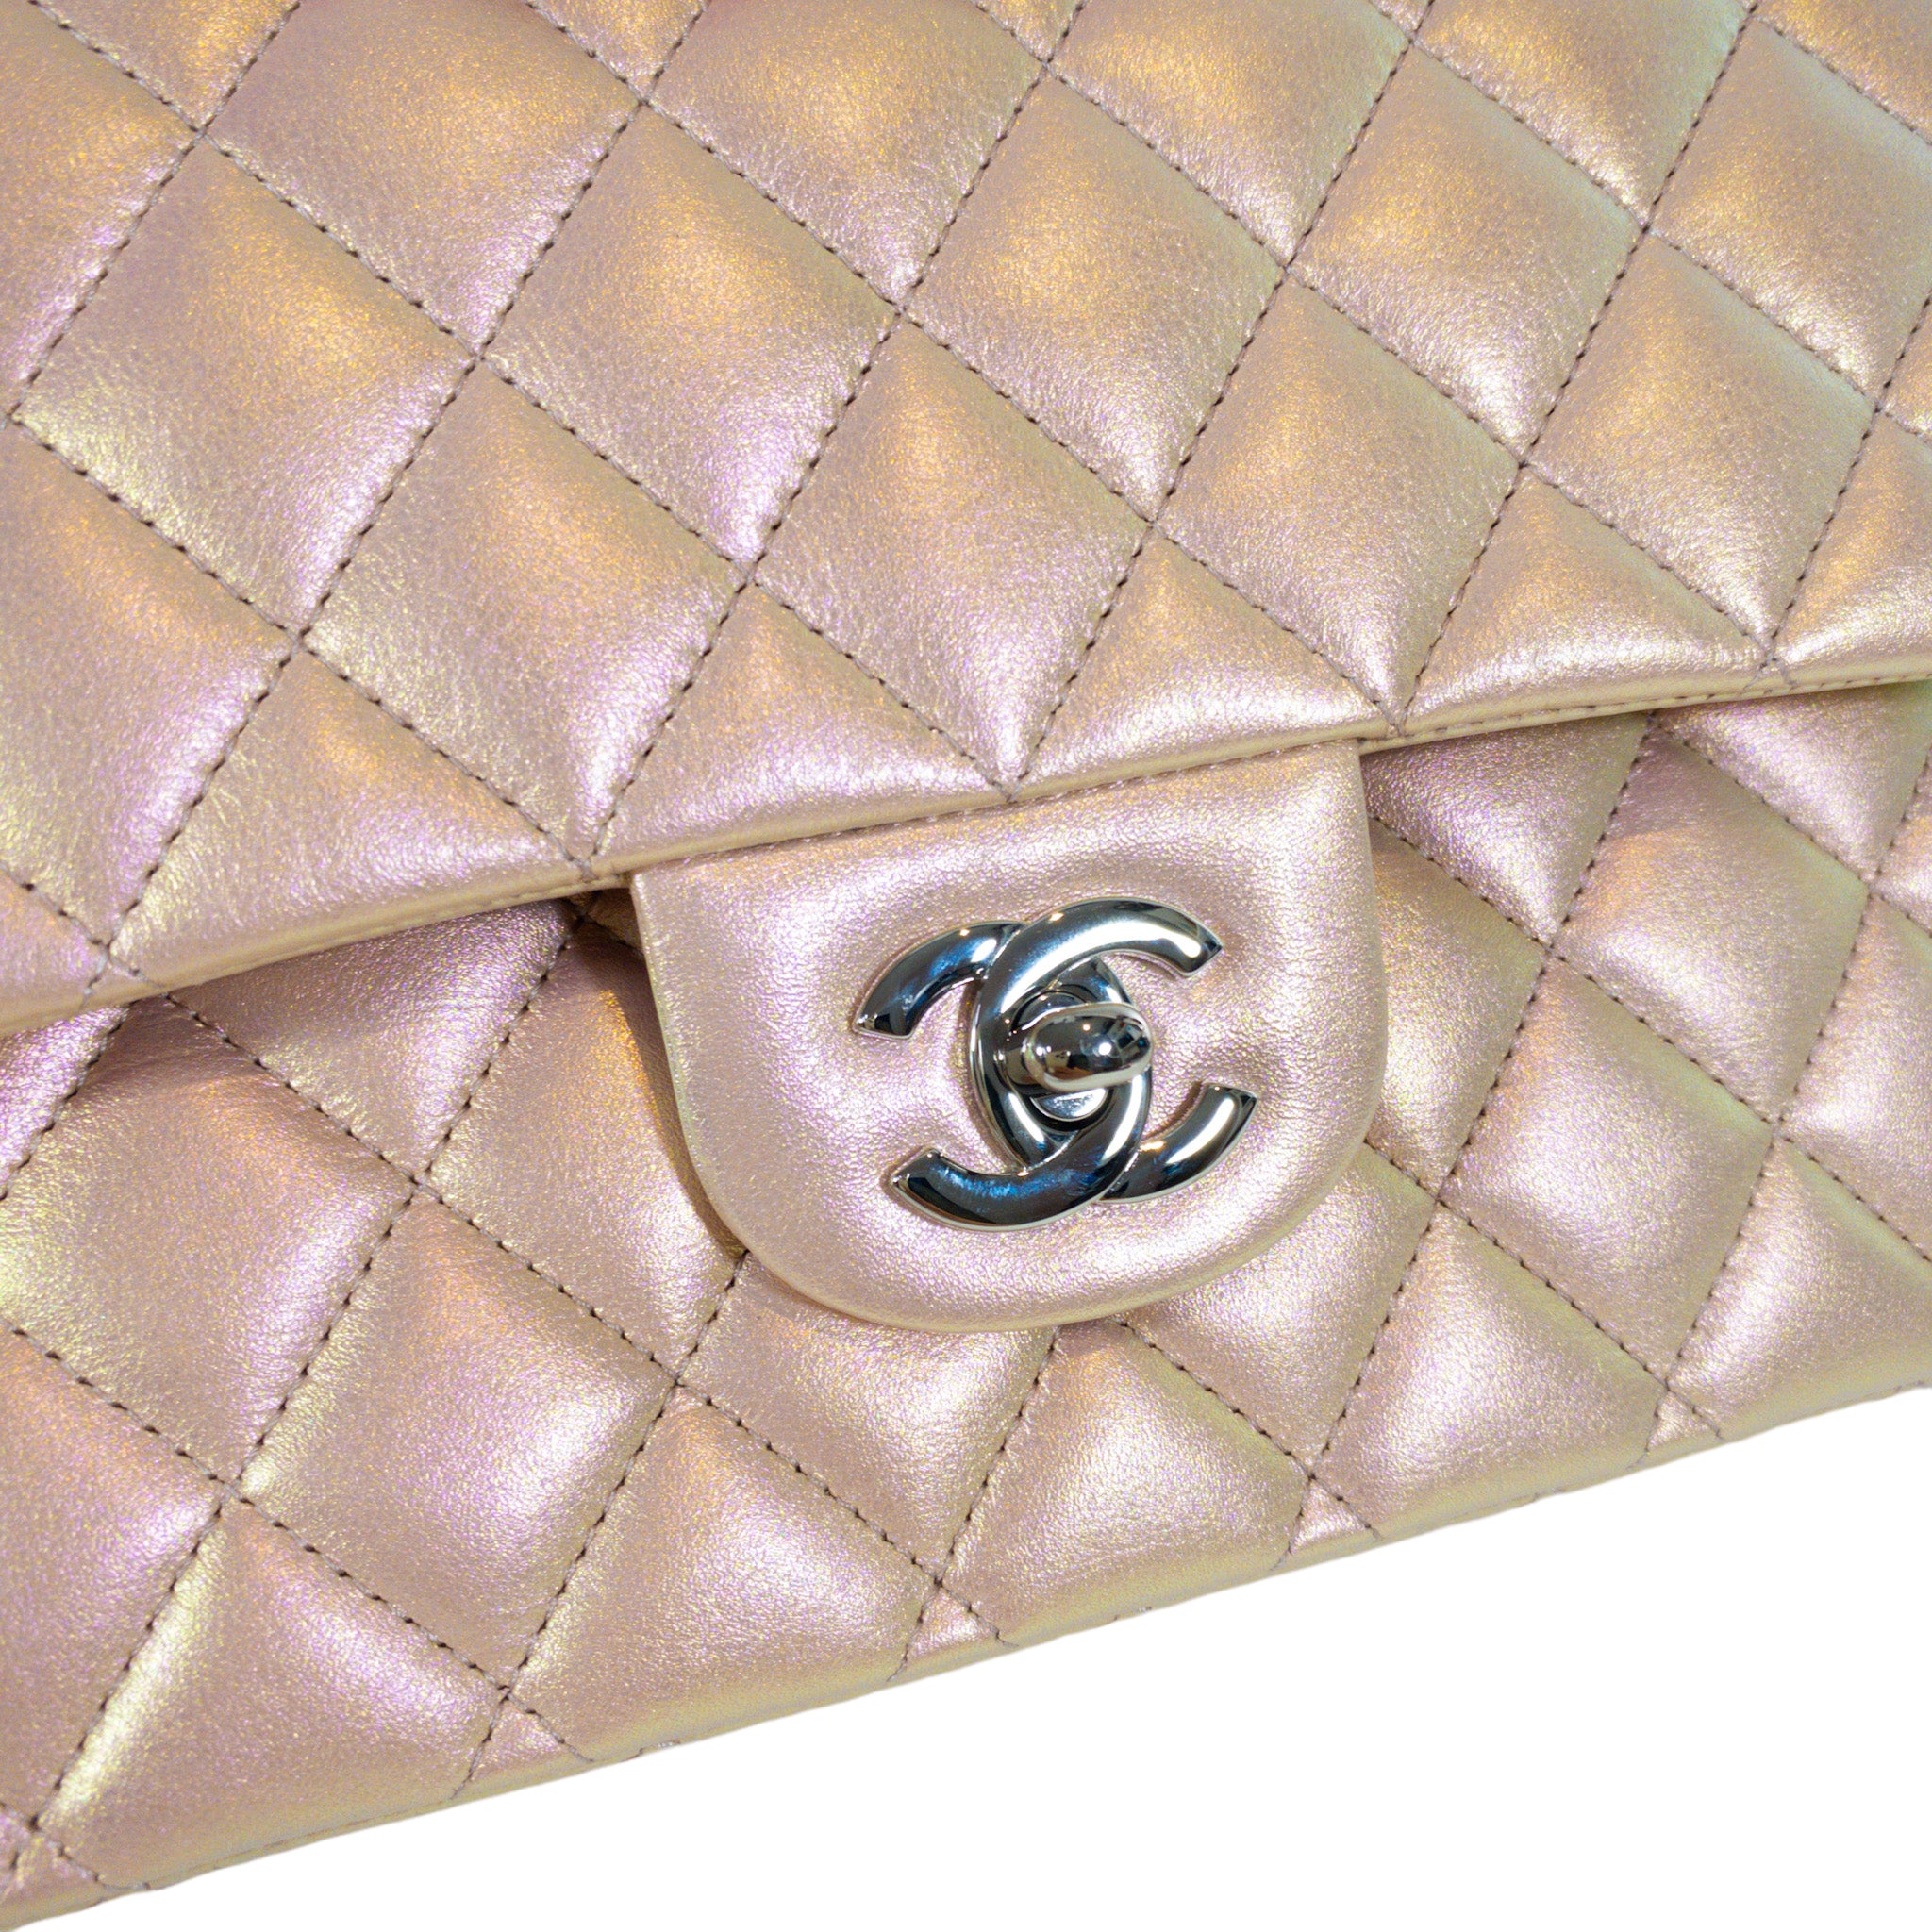 Chanel Pink Iridescent Medium Flap SHW